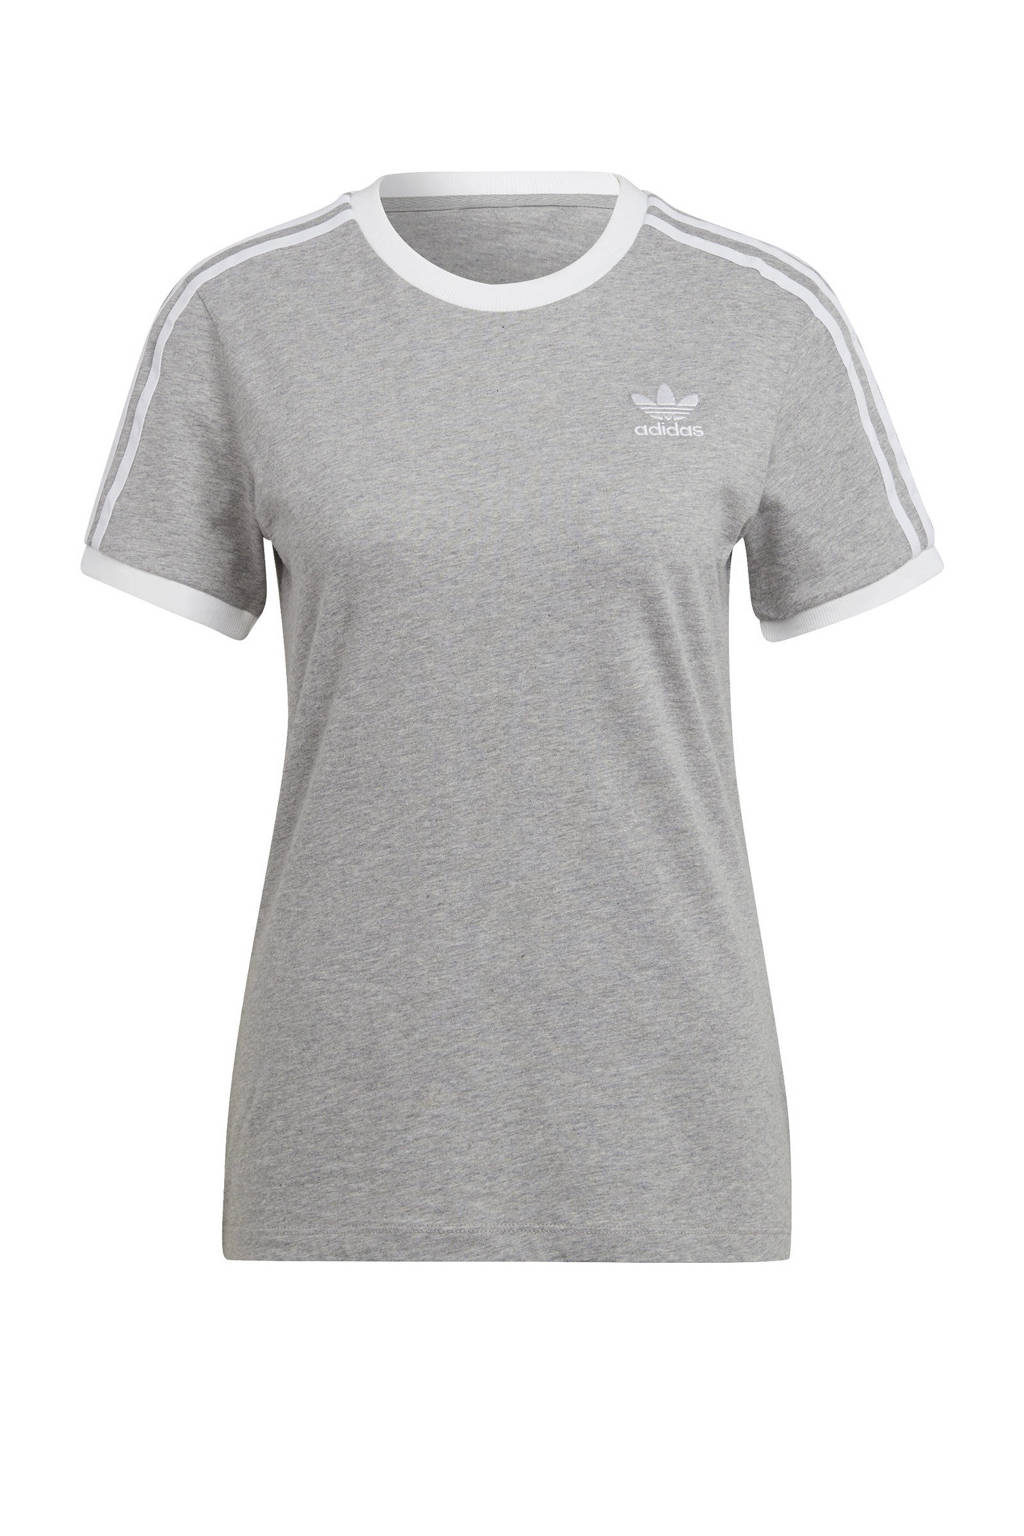 adidas Originals Adicolor T-shirt grijs melange/wit, Grijs melange/wit